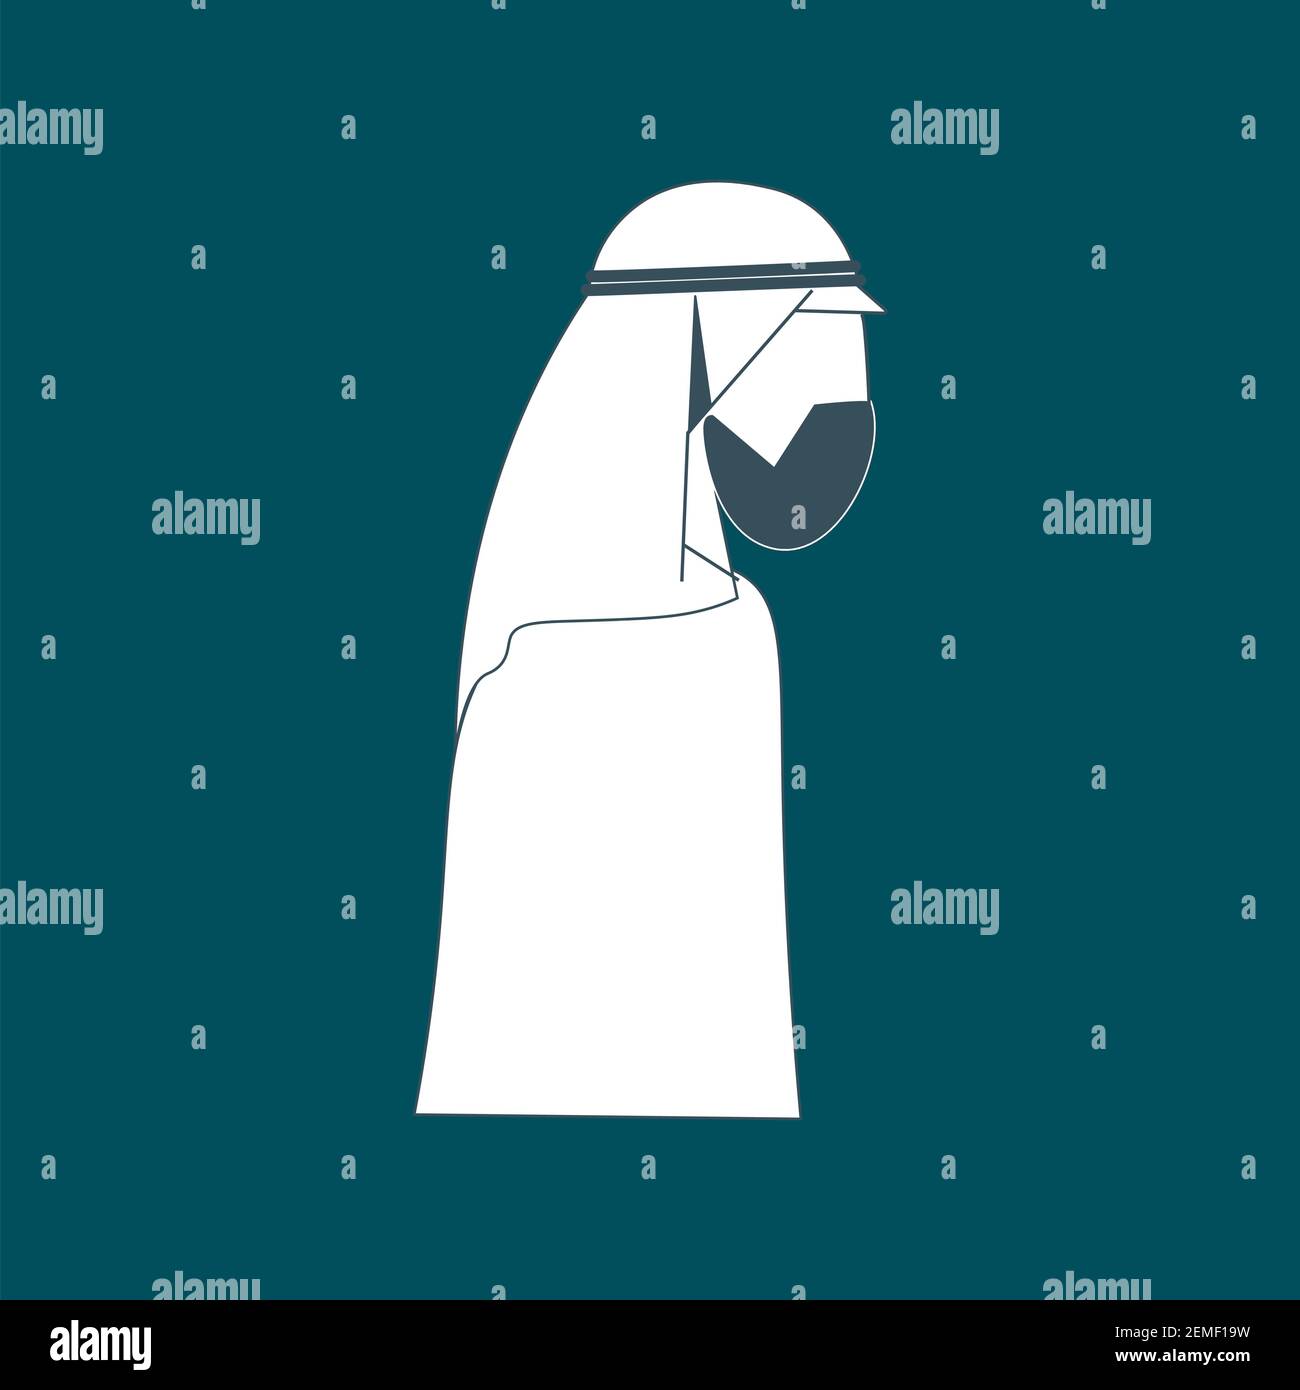 Arab man wearing mask flat design,Arab man with Shumakh flat design, A Saudi man icon wearing shemagh and a thobe Stock Vector